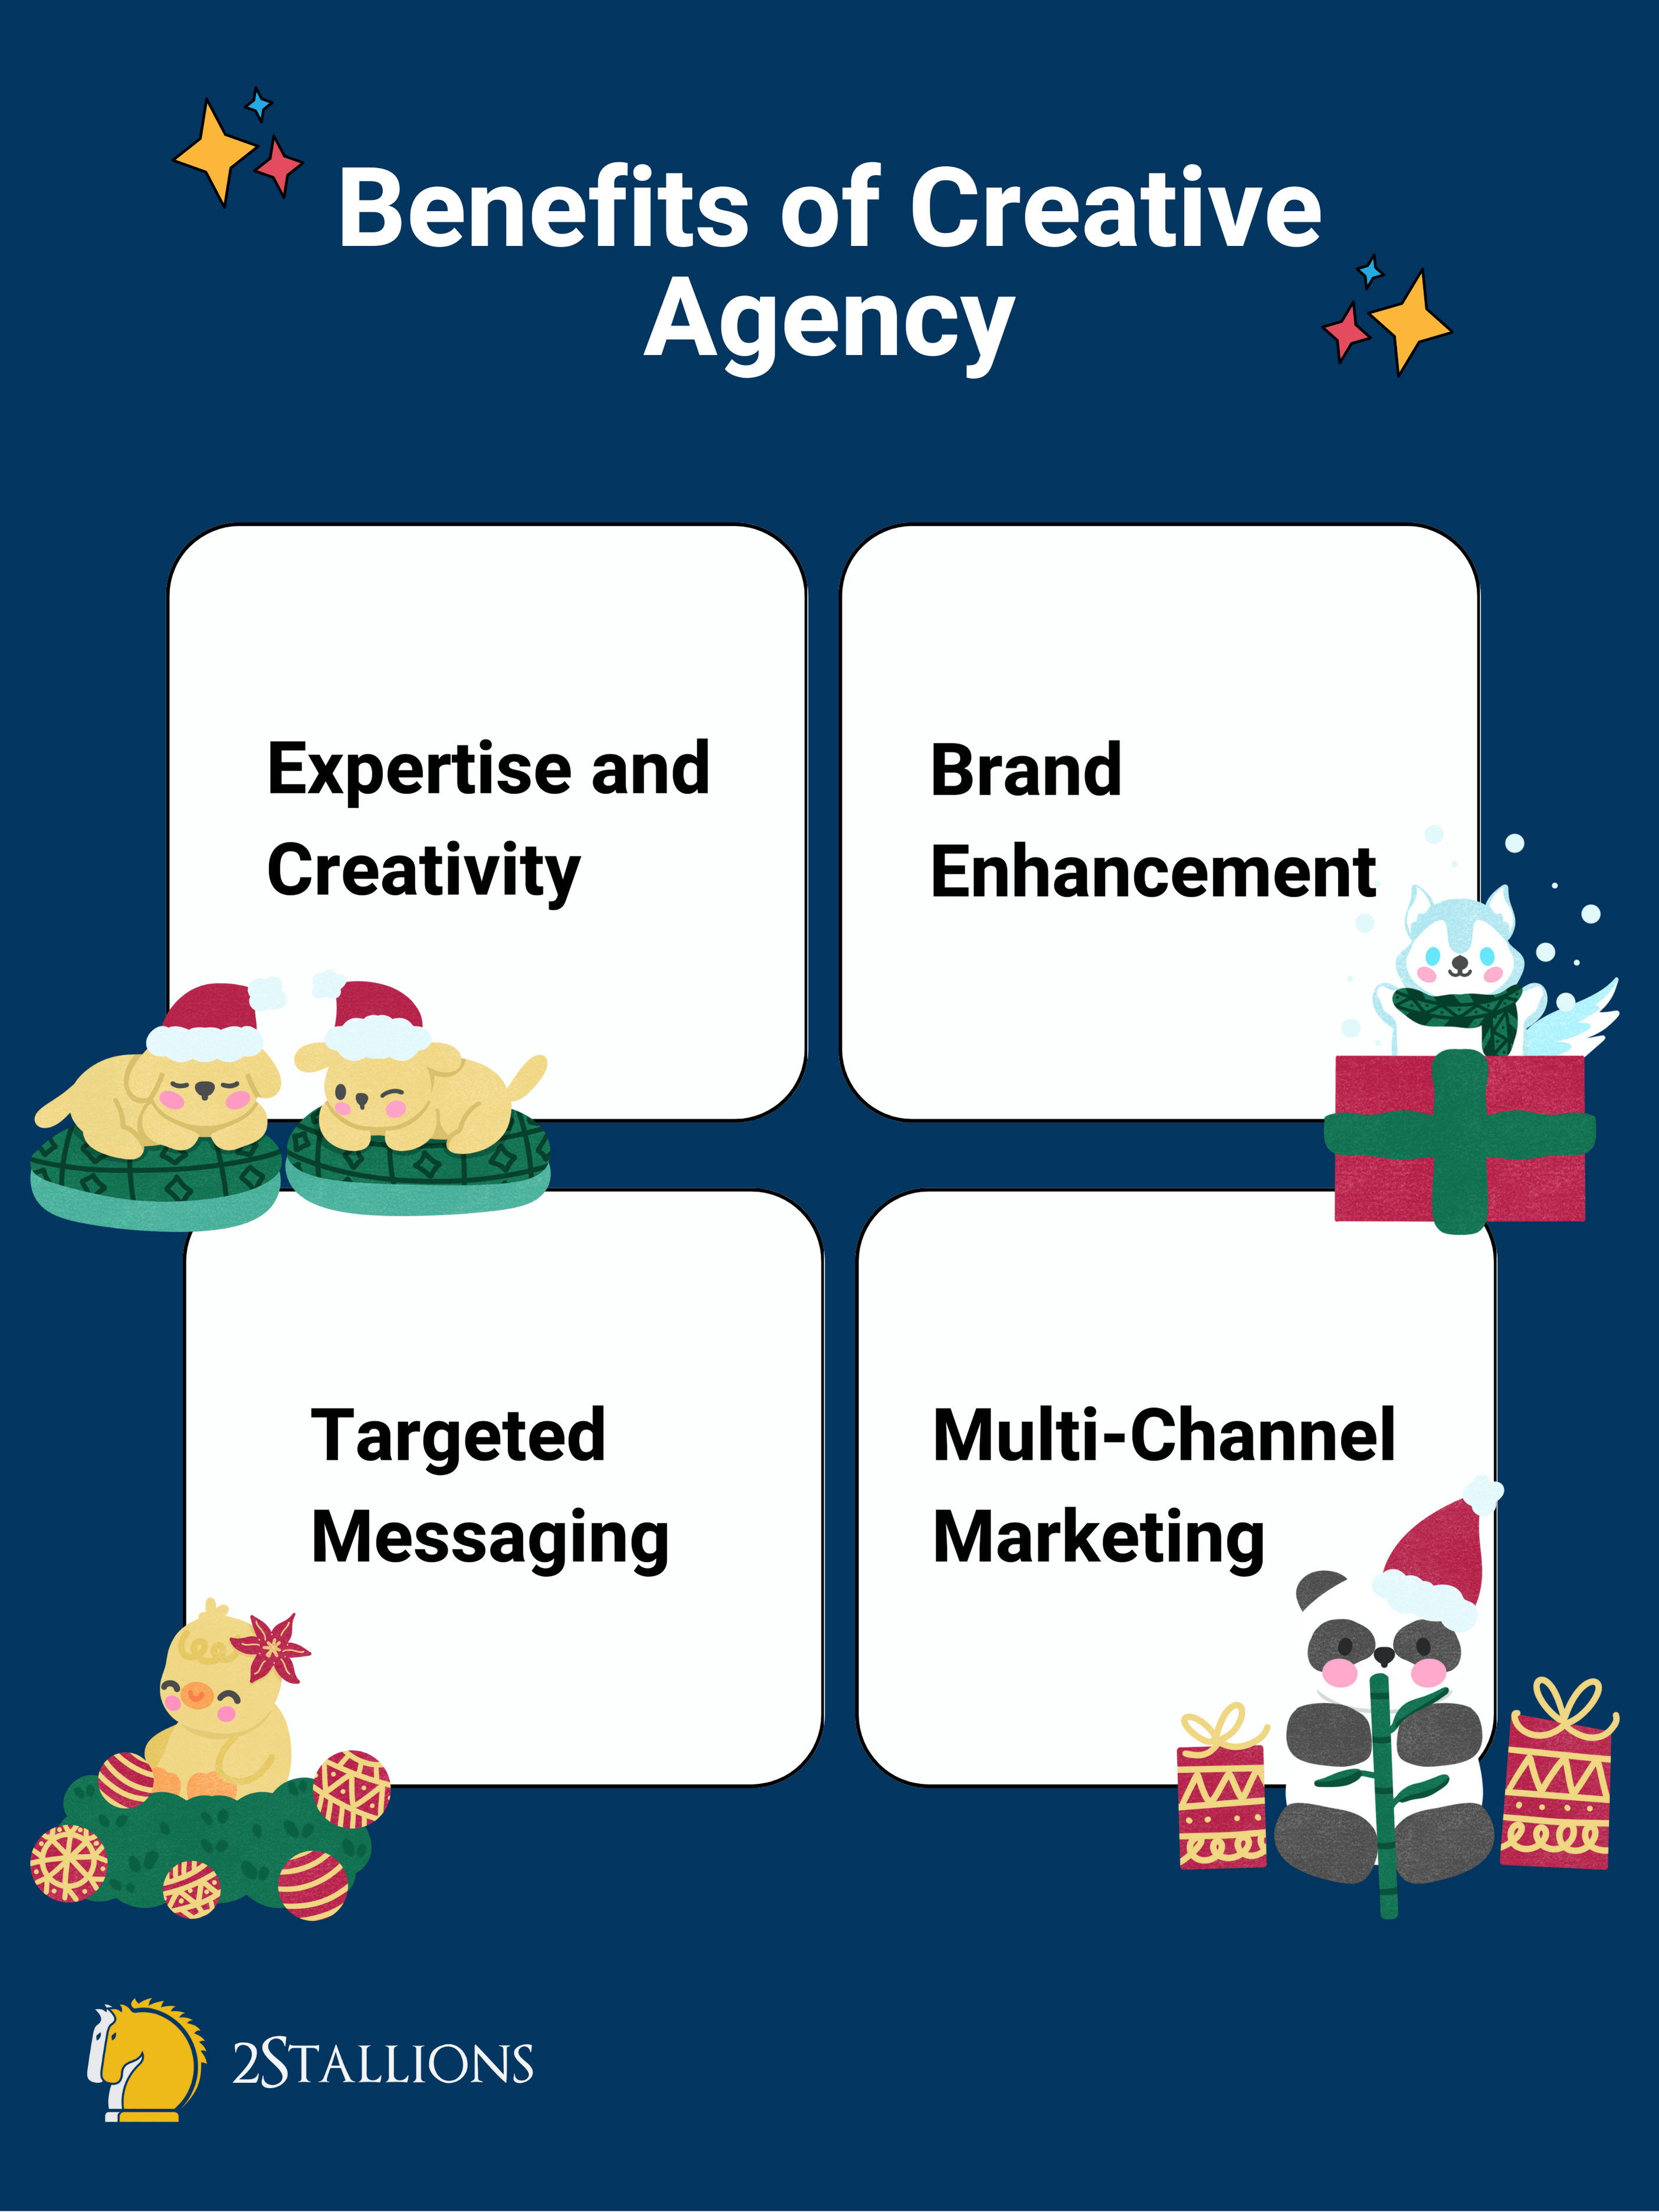 Benefits of Creative Agency | 2Stallions